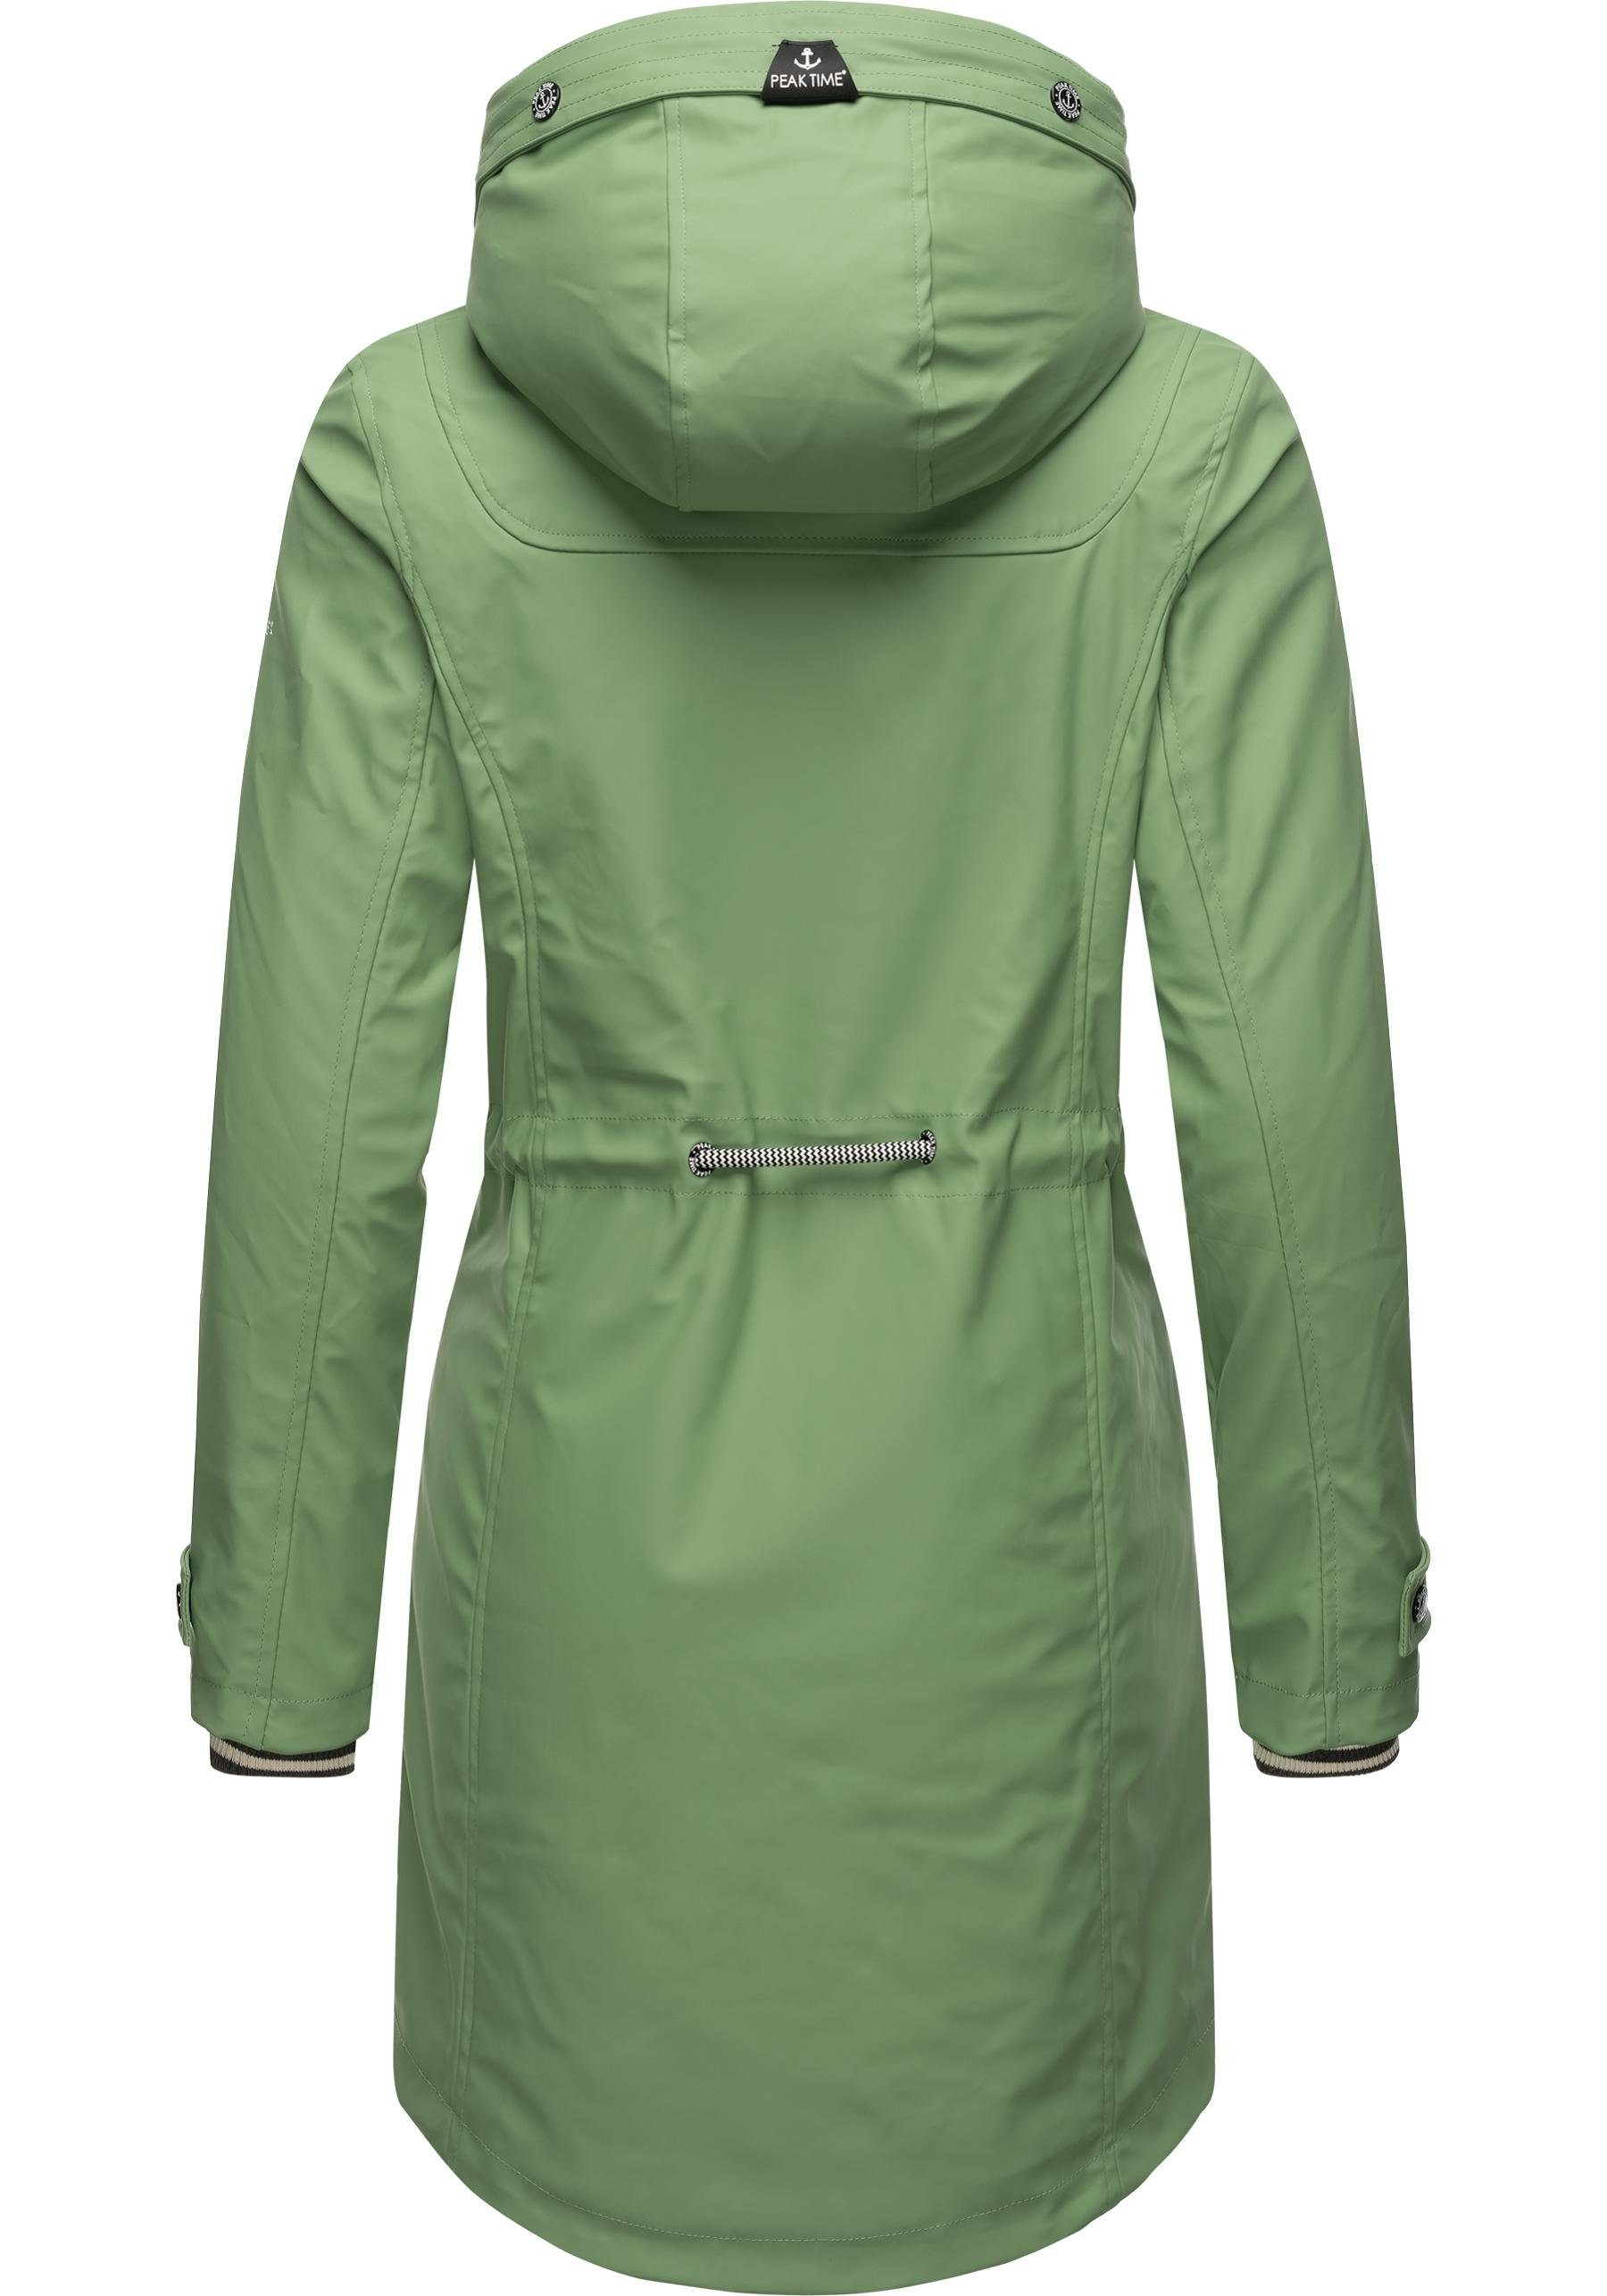 Regenmantel Damen für TIME stylisch taillierter L60042 PEAK lindgrün Regenjacke